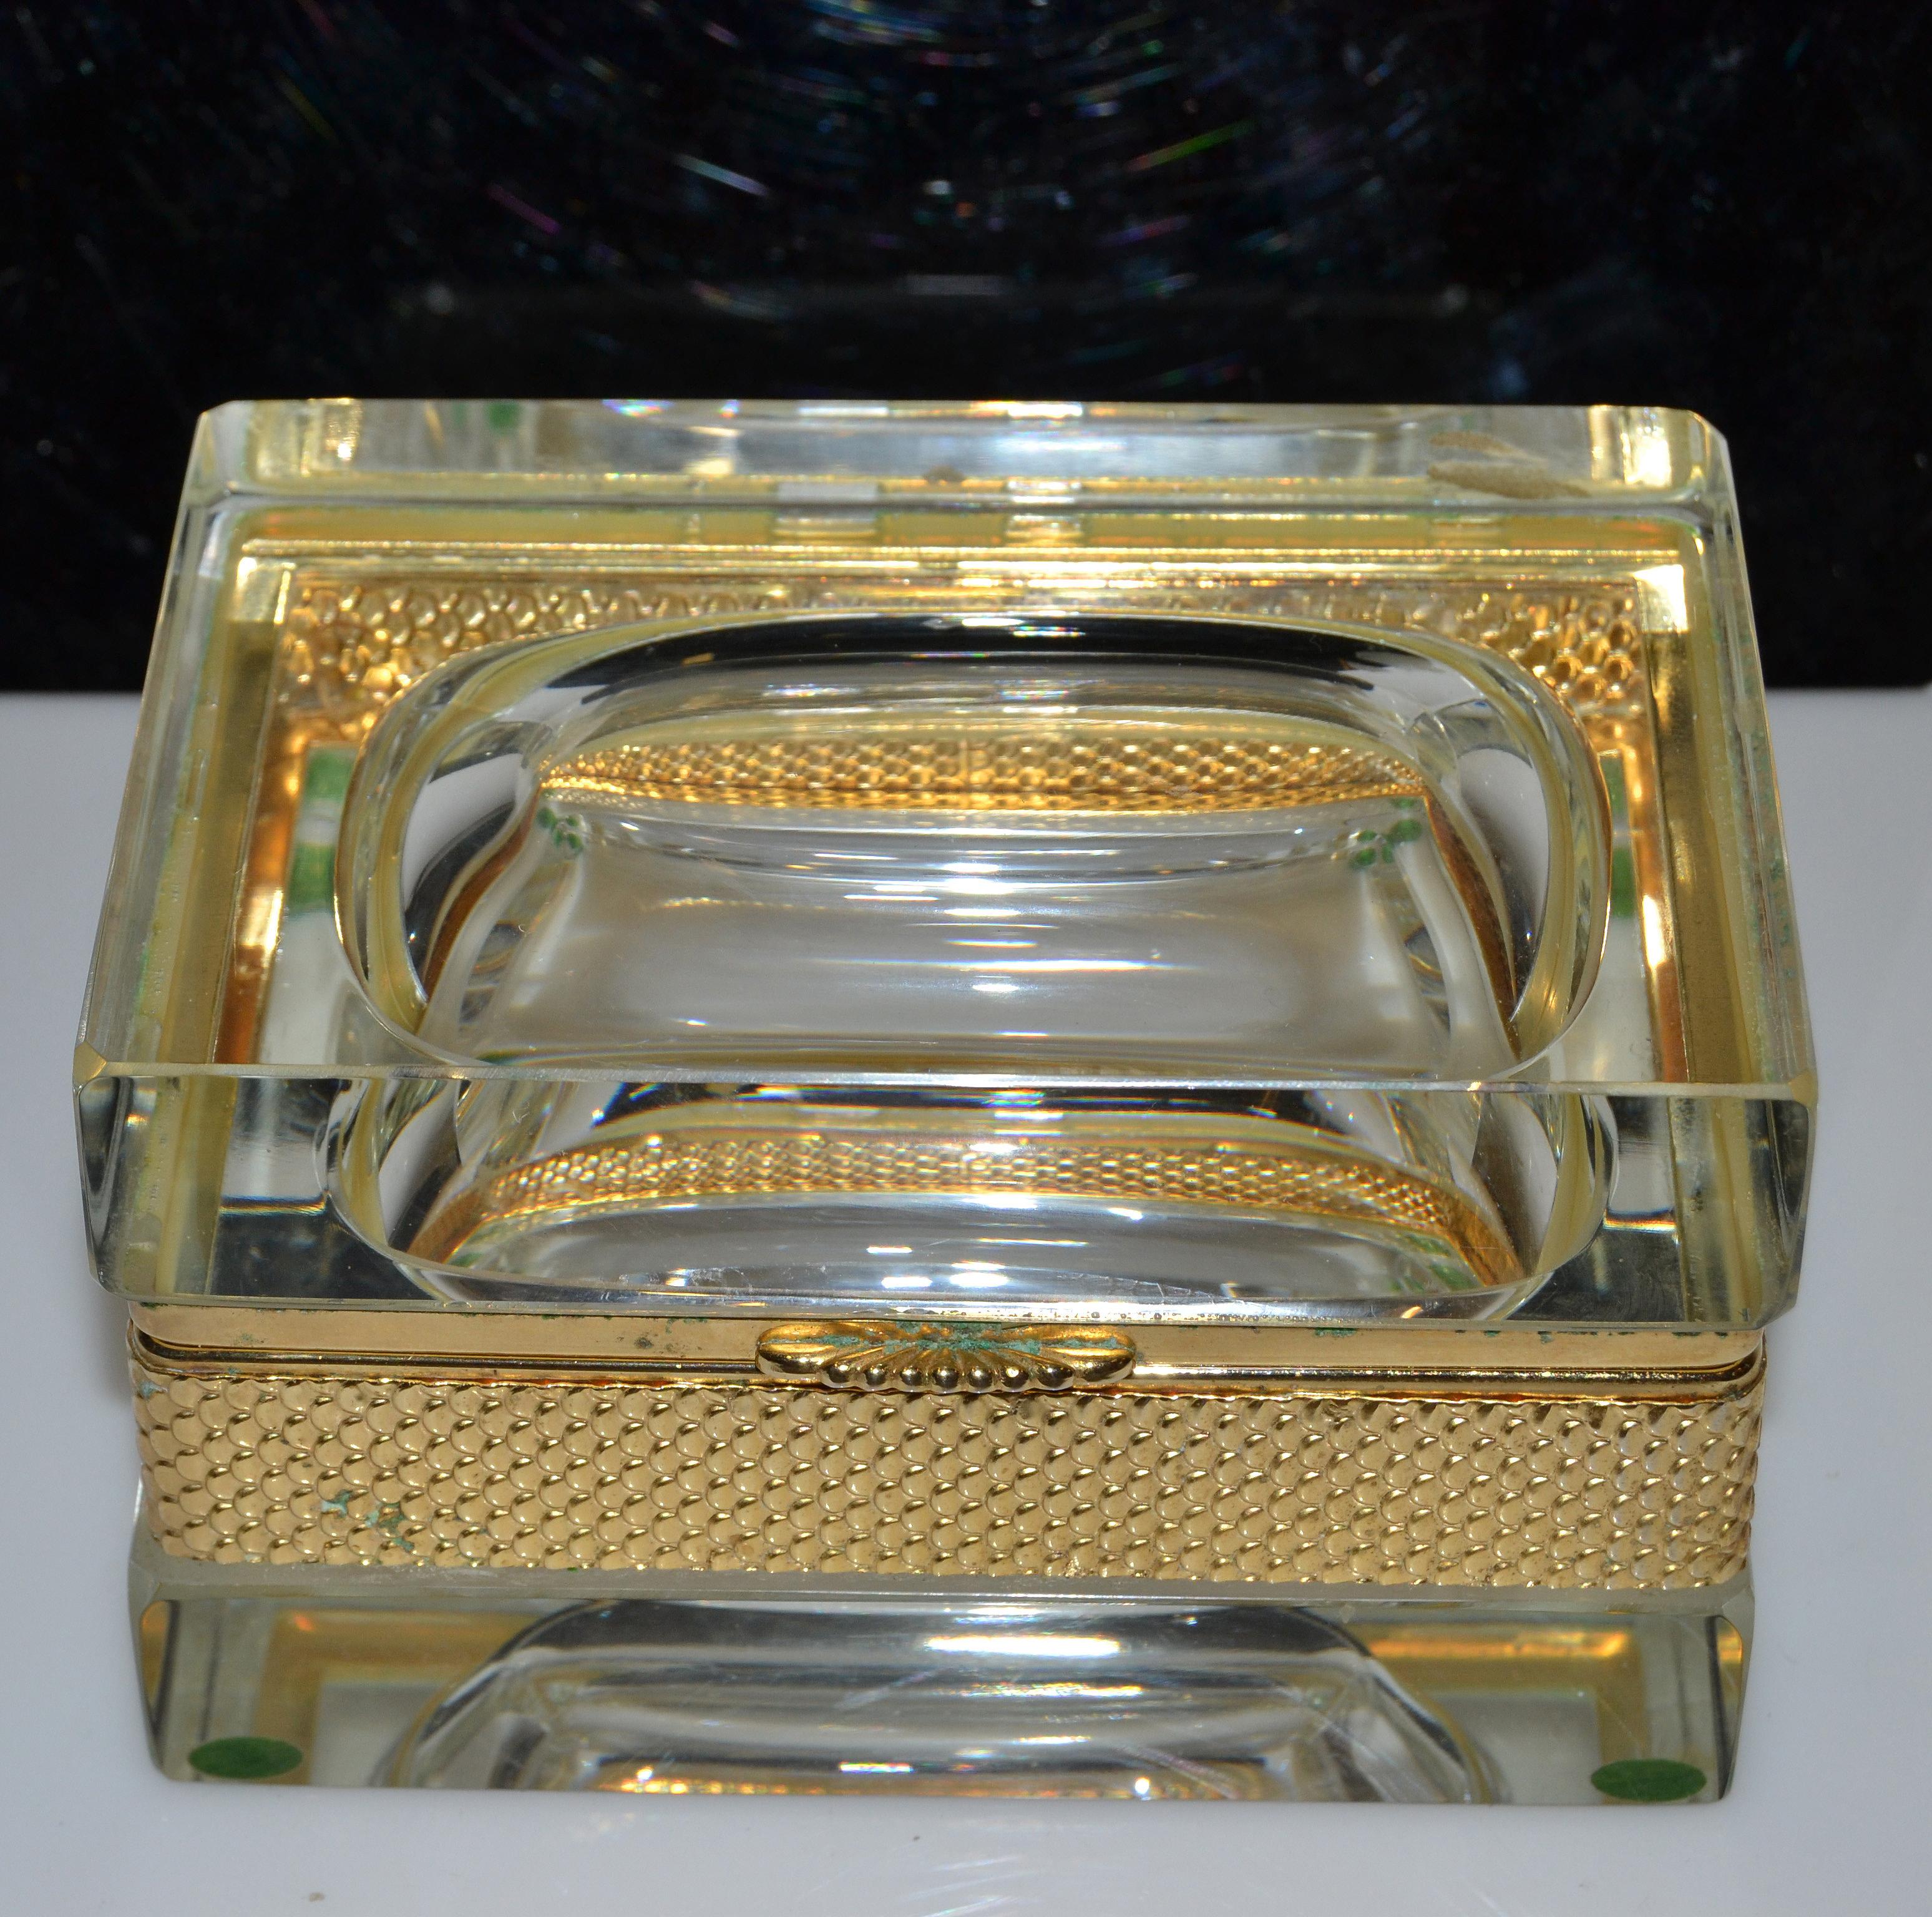 Cased Murano glass & 24k gold plate jewelry box, Keepsake attributed to Alessandro Mandruzzato.
Art Deco Style made in Italy, circa 1950. 
 